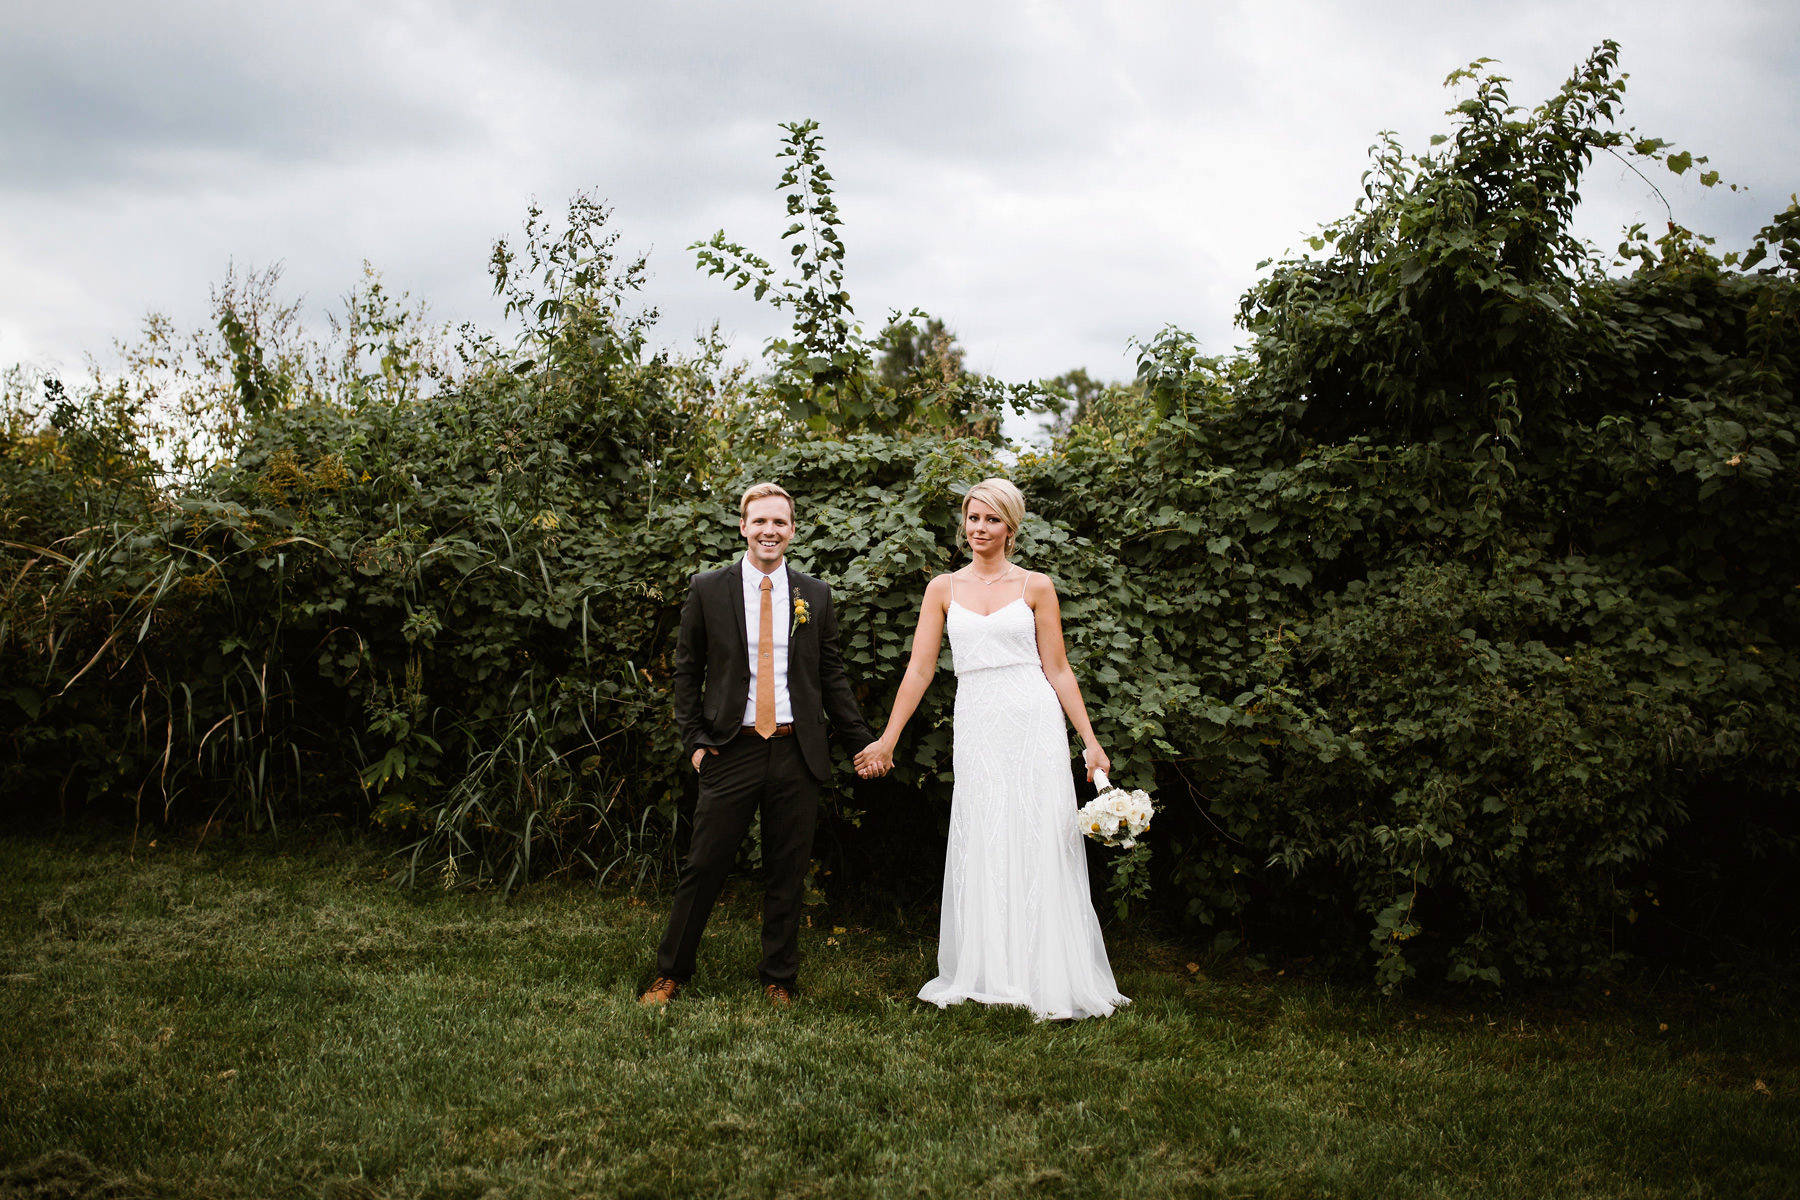 Alldredge Orchard Kansas City_Kindling Wedding Photography BLOG 55.JPG